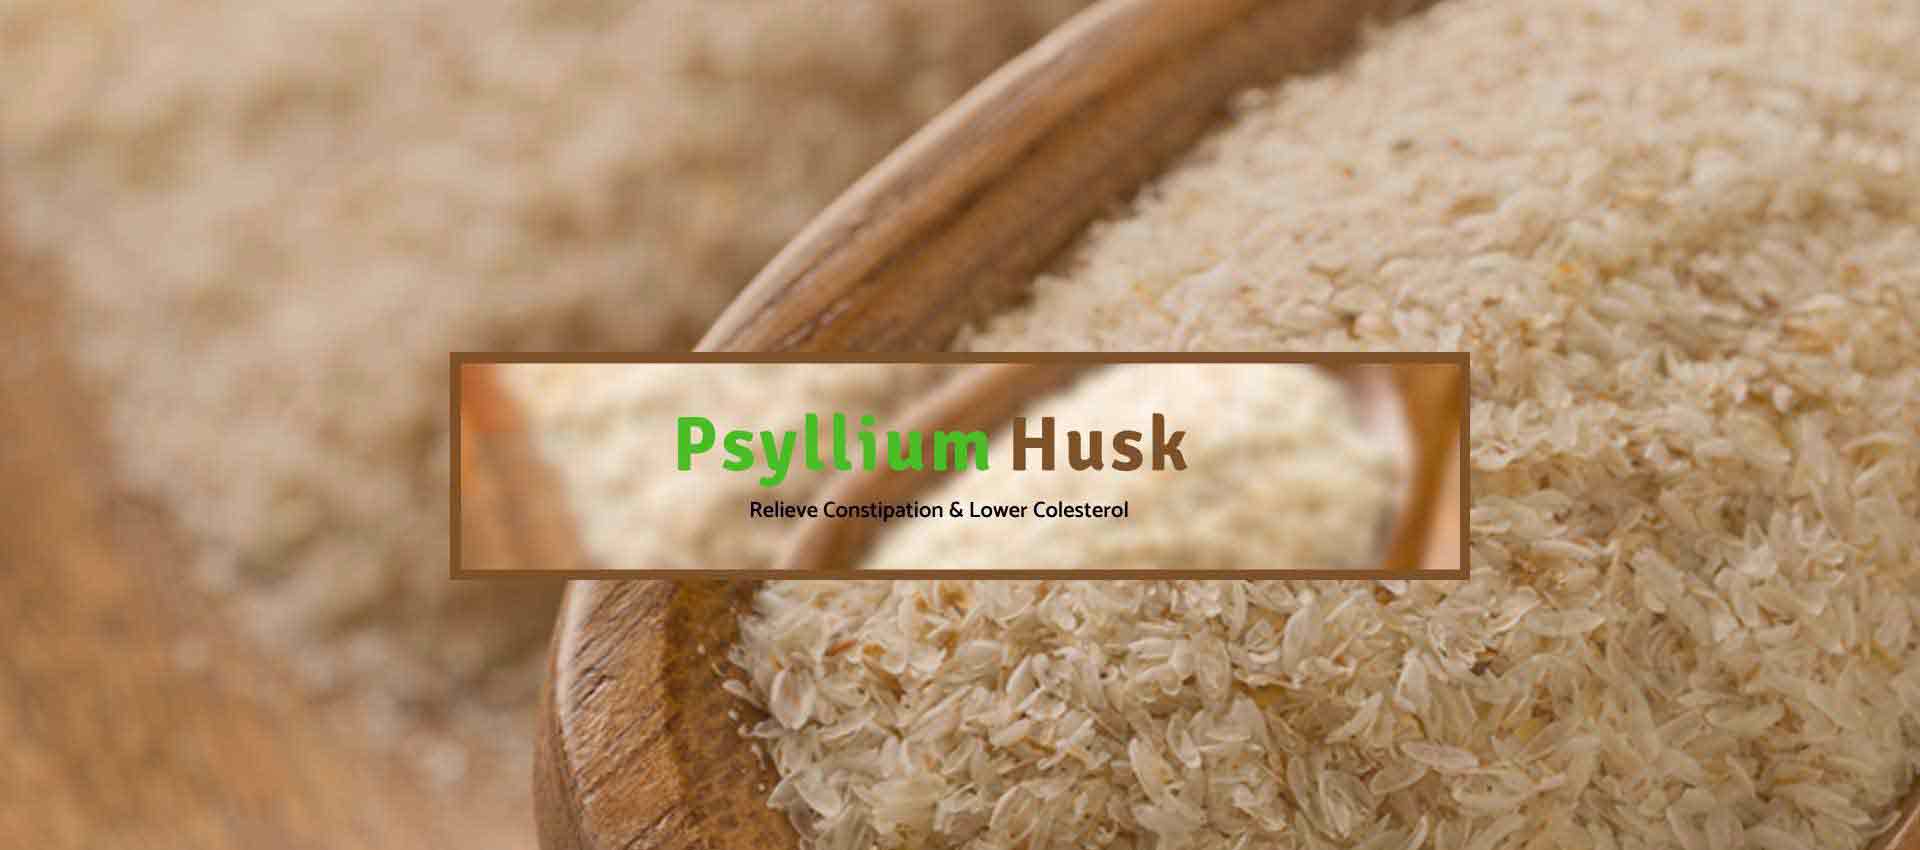 Psyllium Husk Manufacturers in Vietnam